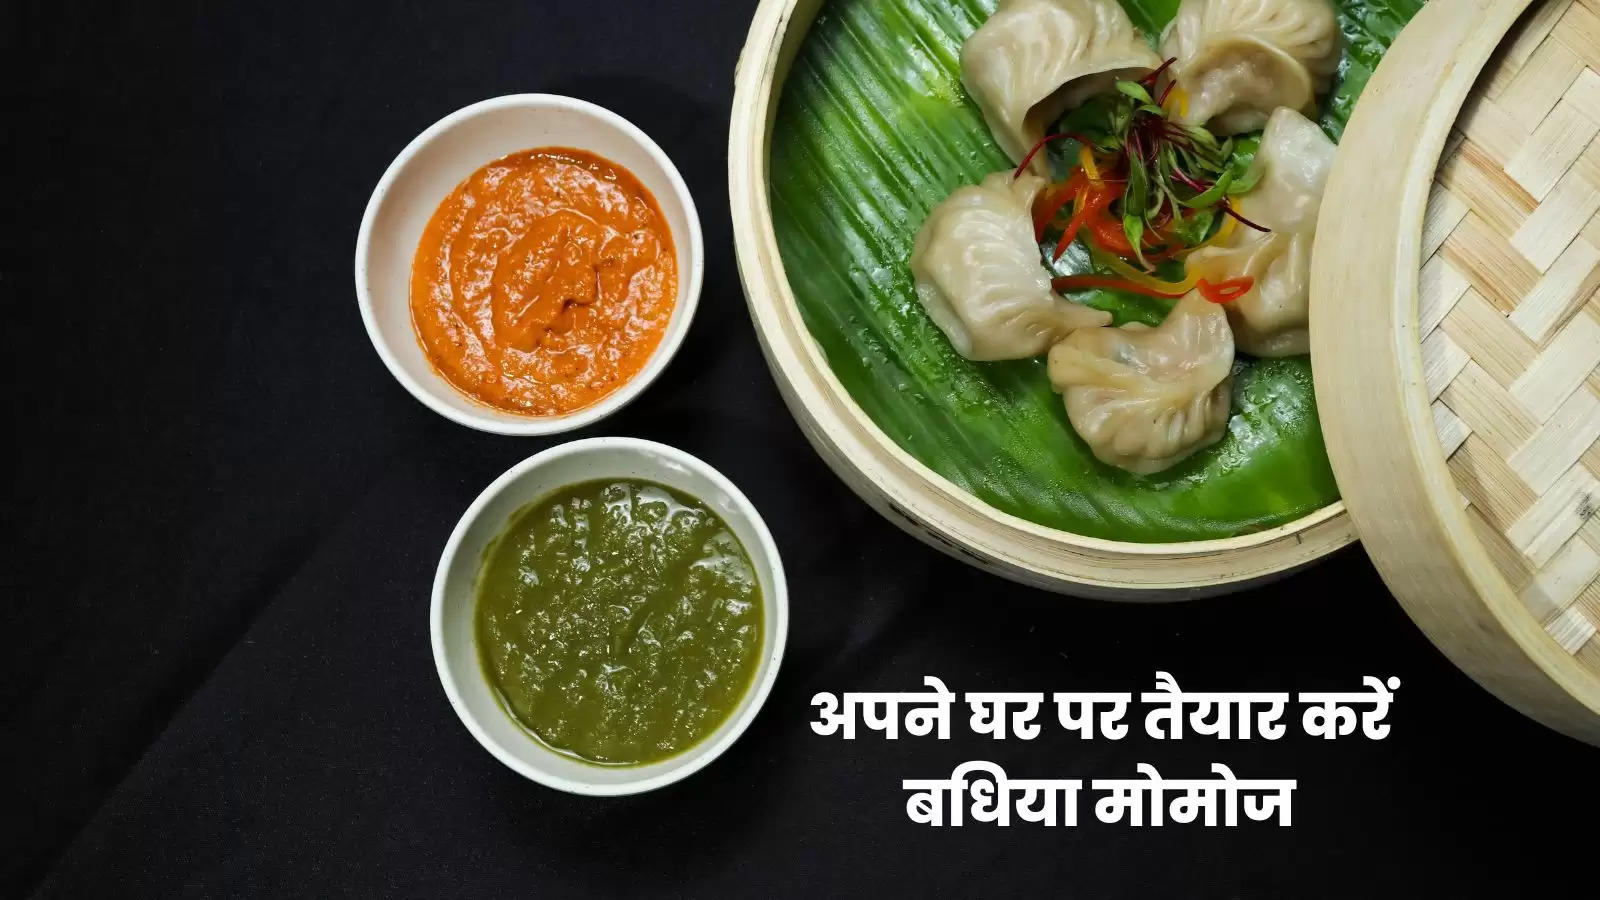 momos recipe in hindi : मोमोस रेसिपी इन हिंदी : veg momos recipe in hindi